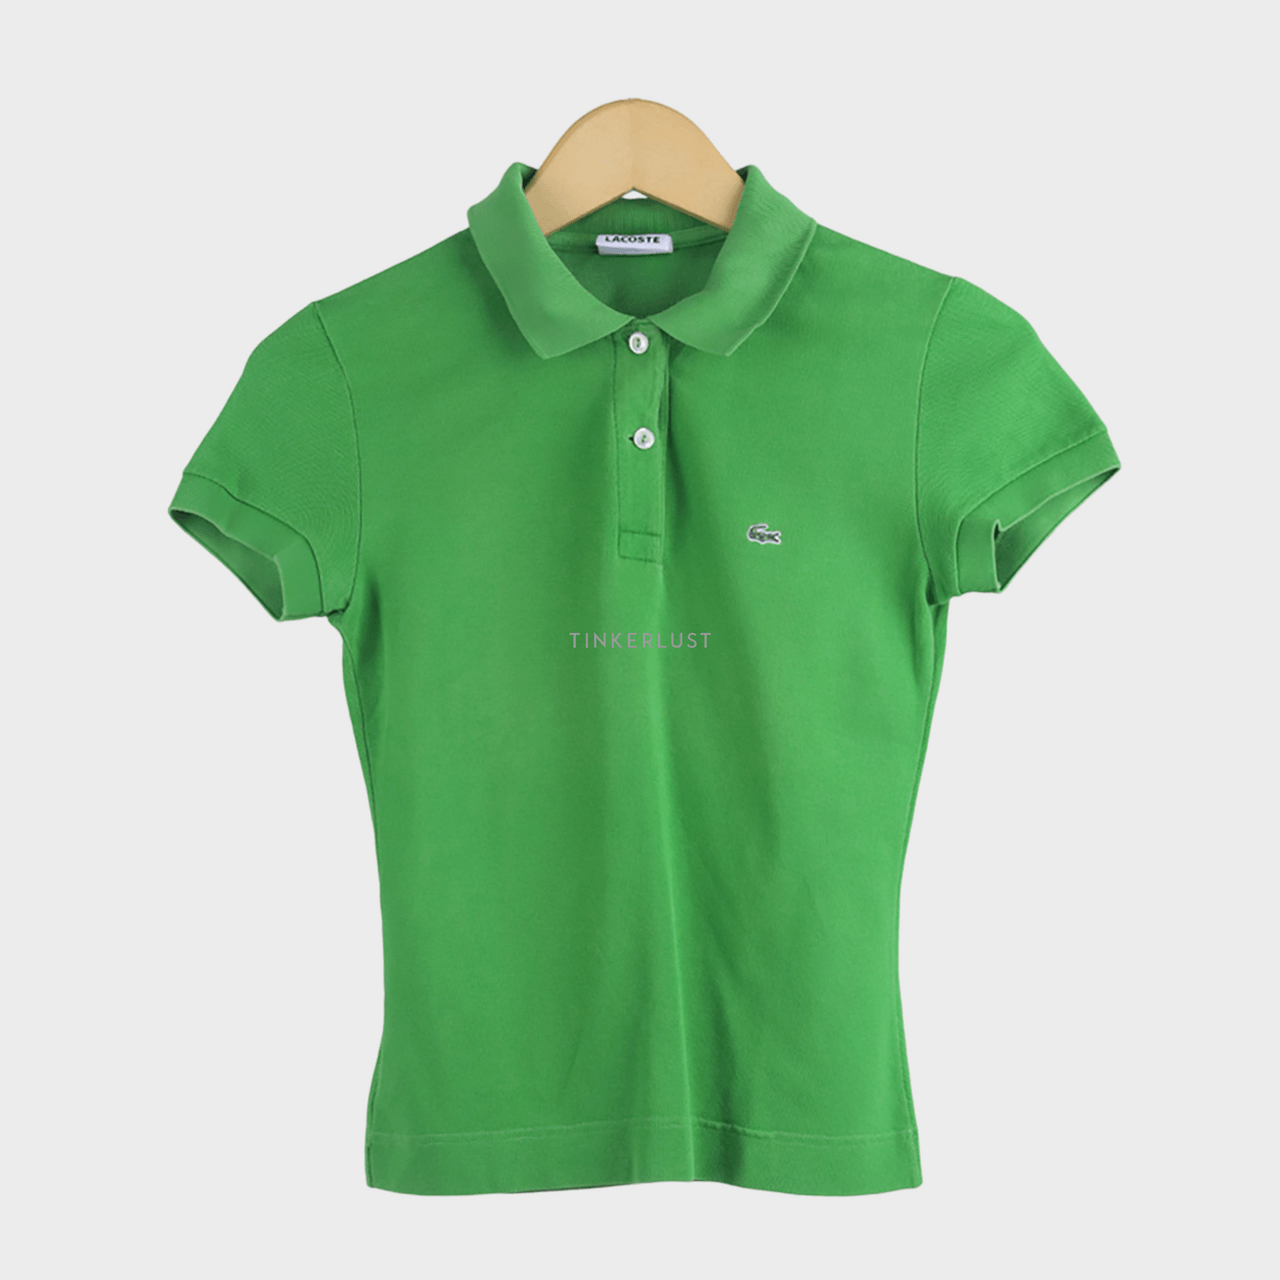 Lacoste Green T-Shirt